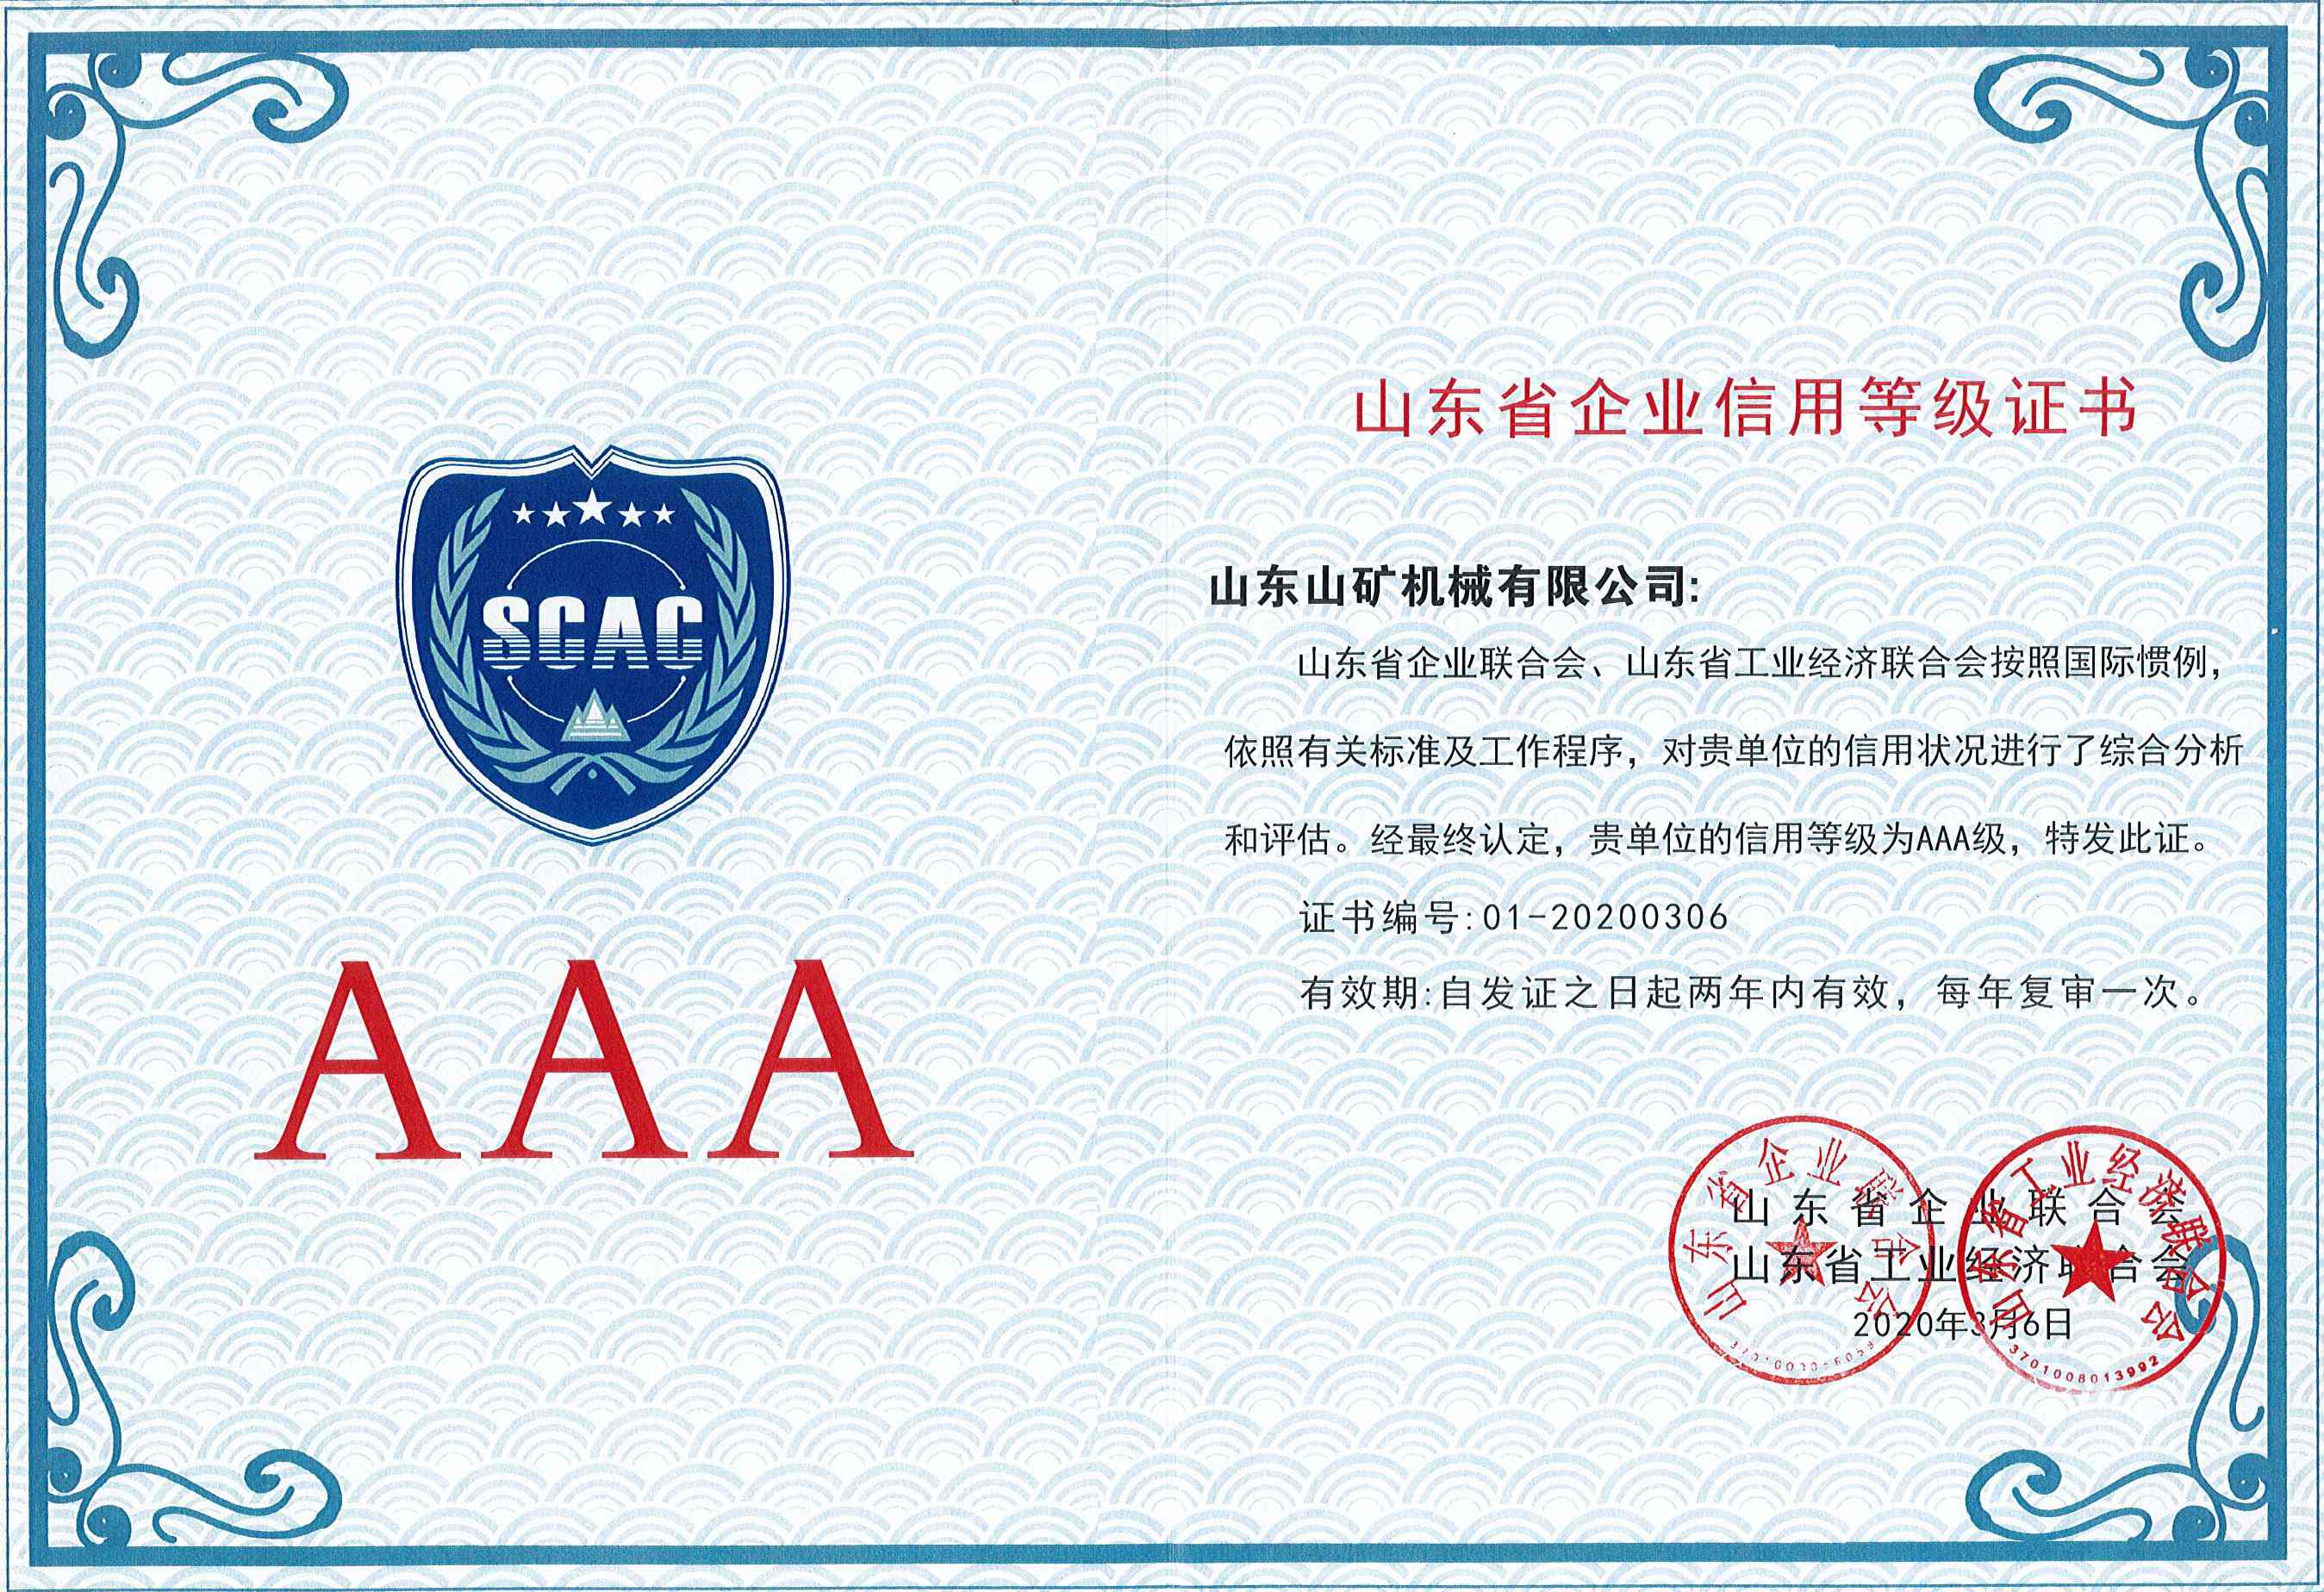 AAA企业信誉品级证书